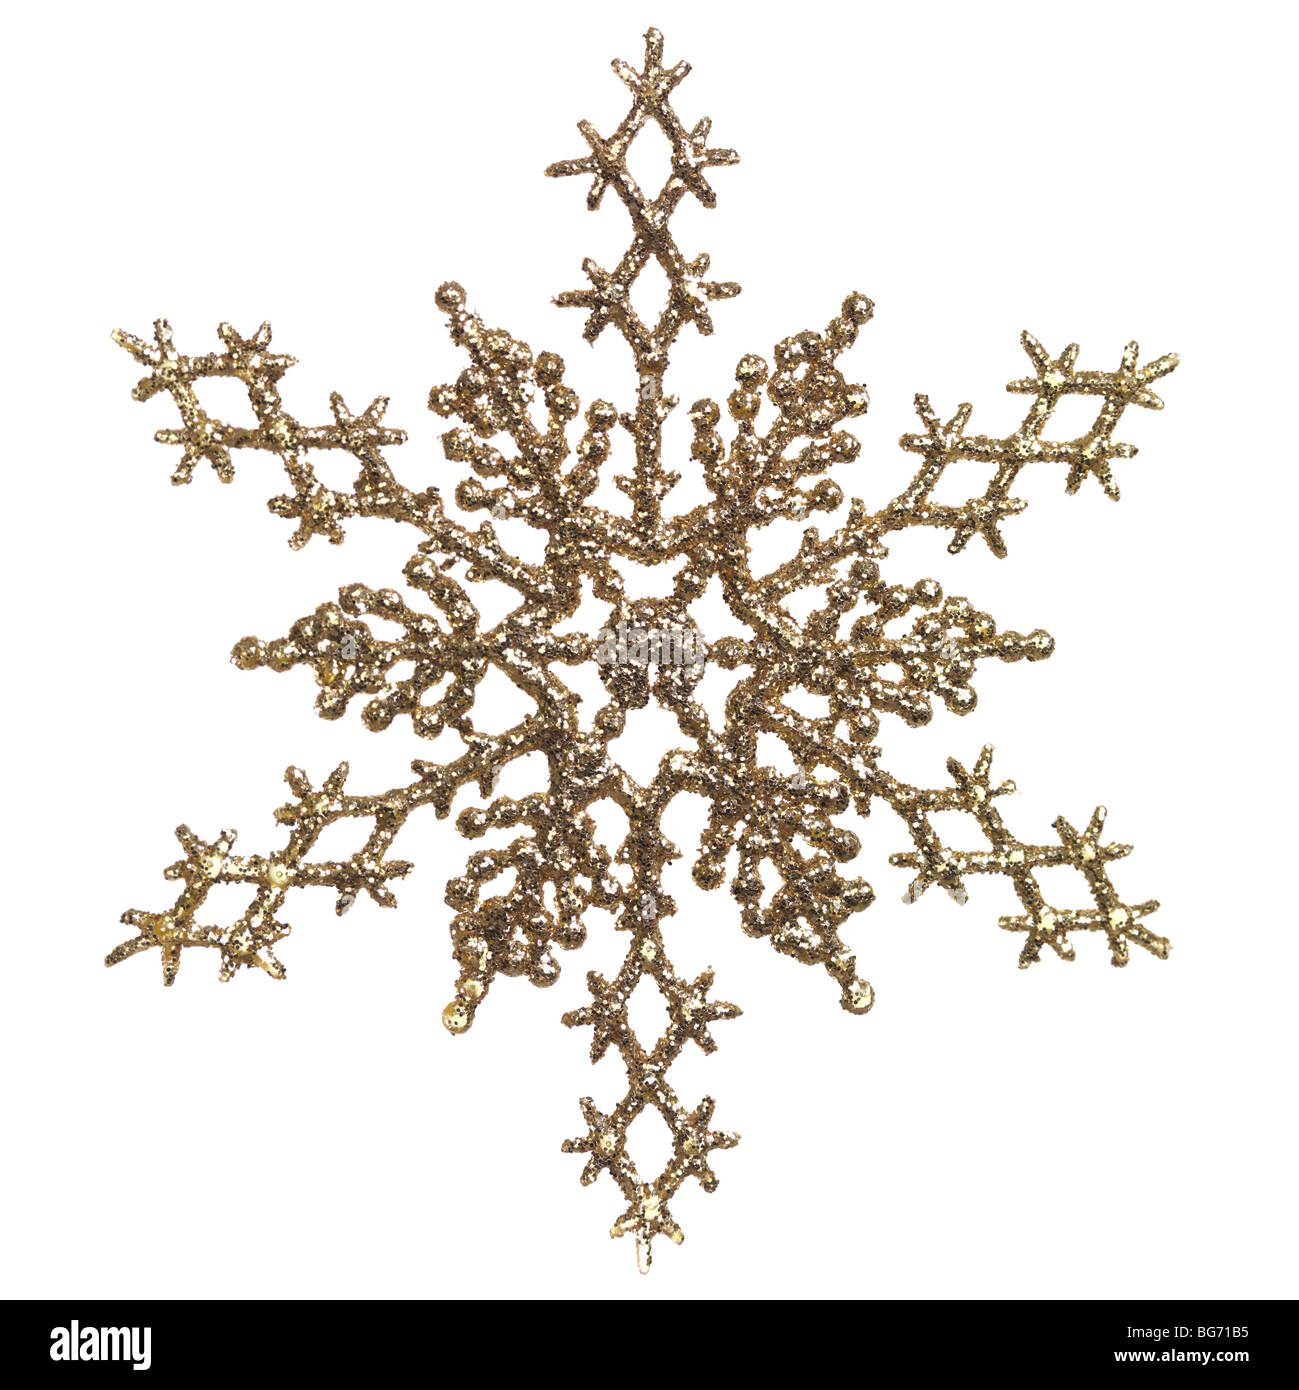 Shiny golden snowflake ornament Christmas tree decoration isolated on white background Stock Photo